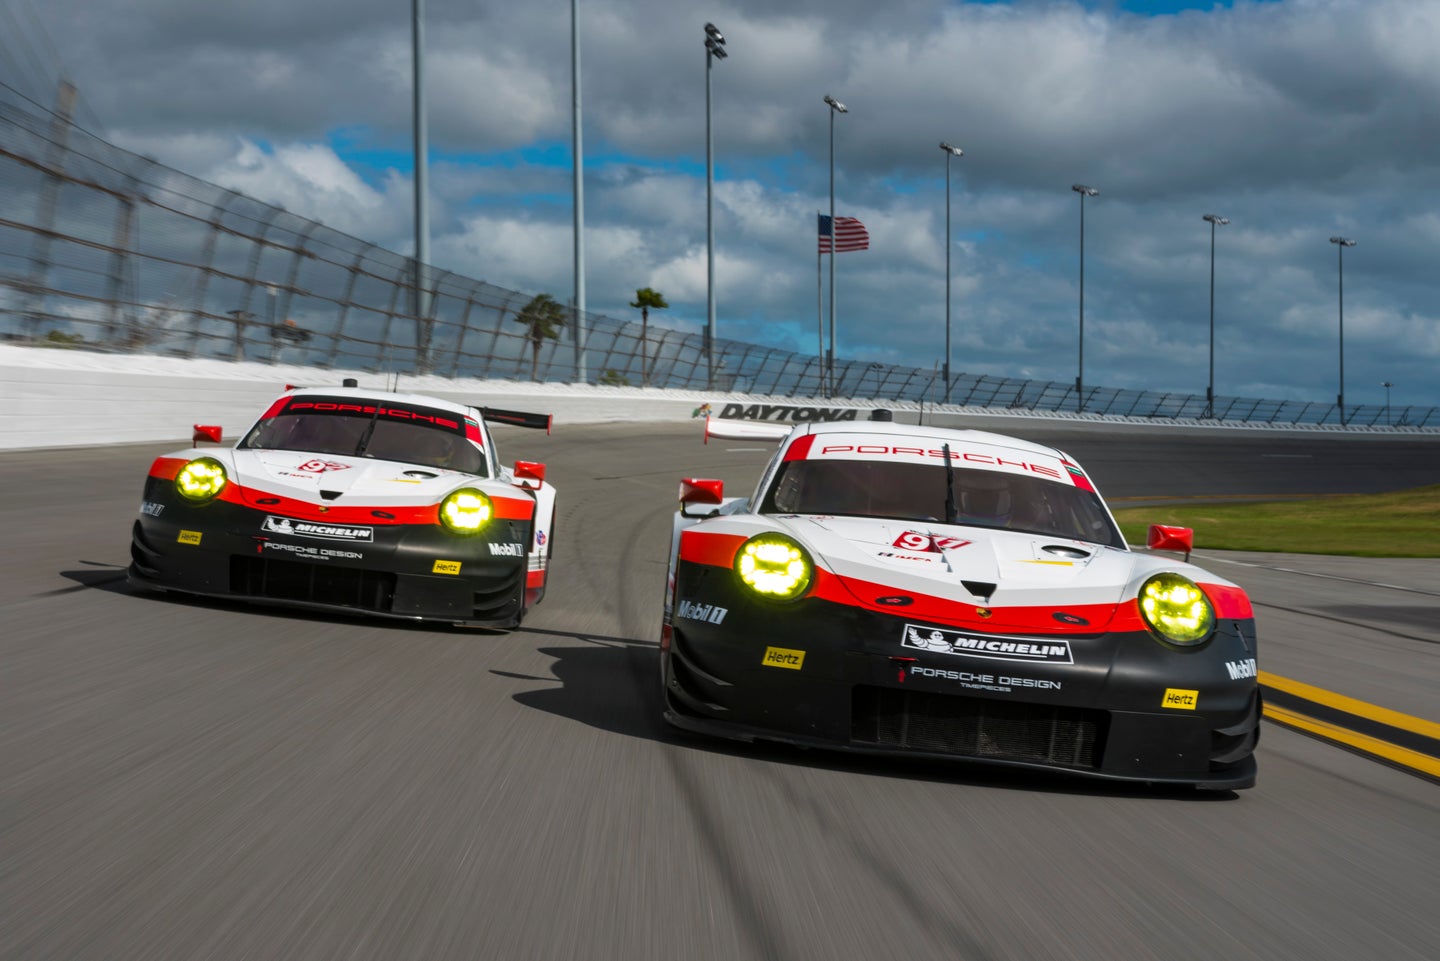 Porsche’s Mid-Engine 911 RSR Makes Public On Track Debut At Daytona